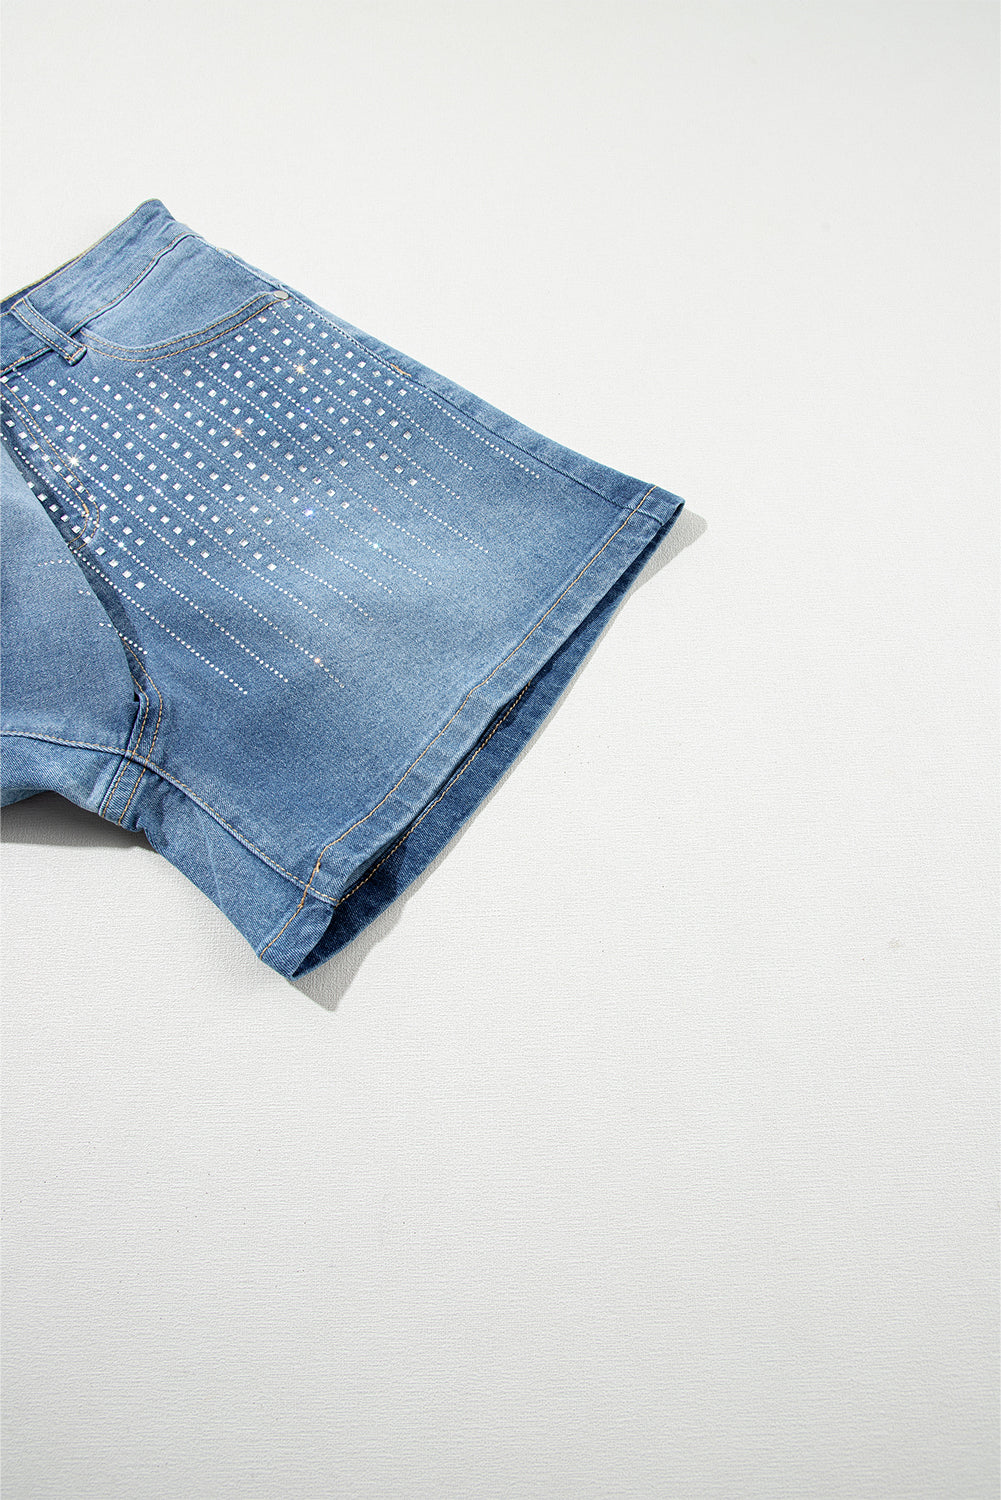 - Ashleigh Blue Rhinestone Embellished Denim Shorts - women's denim shorts at TFC&H Co.